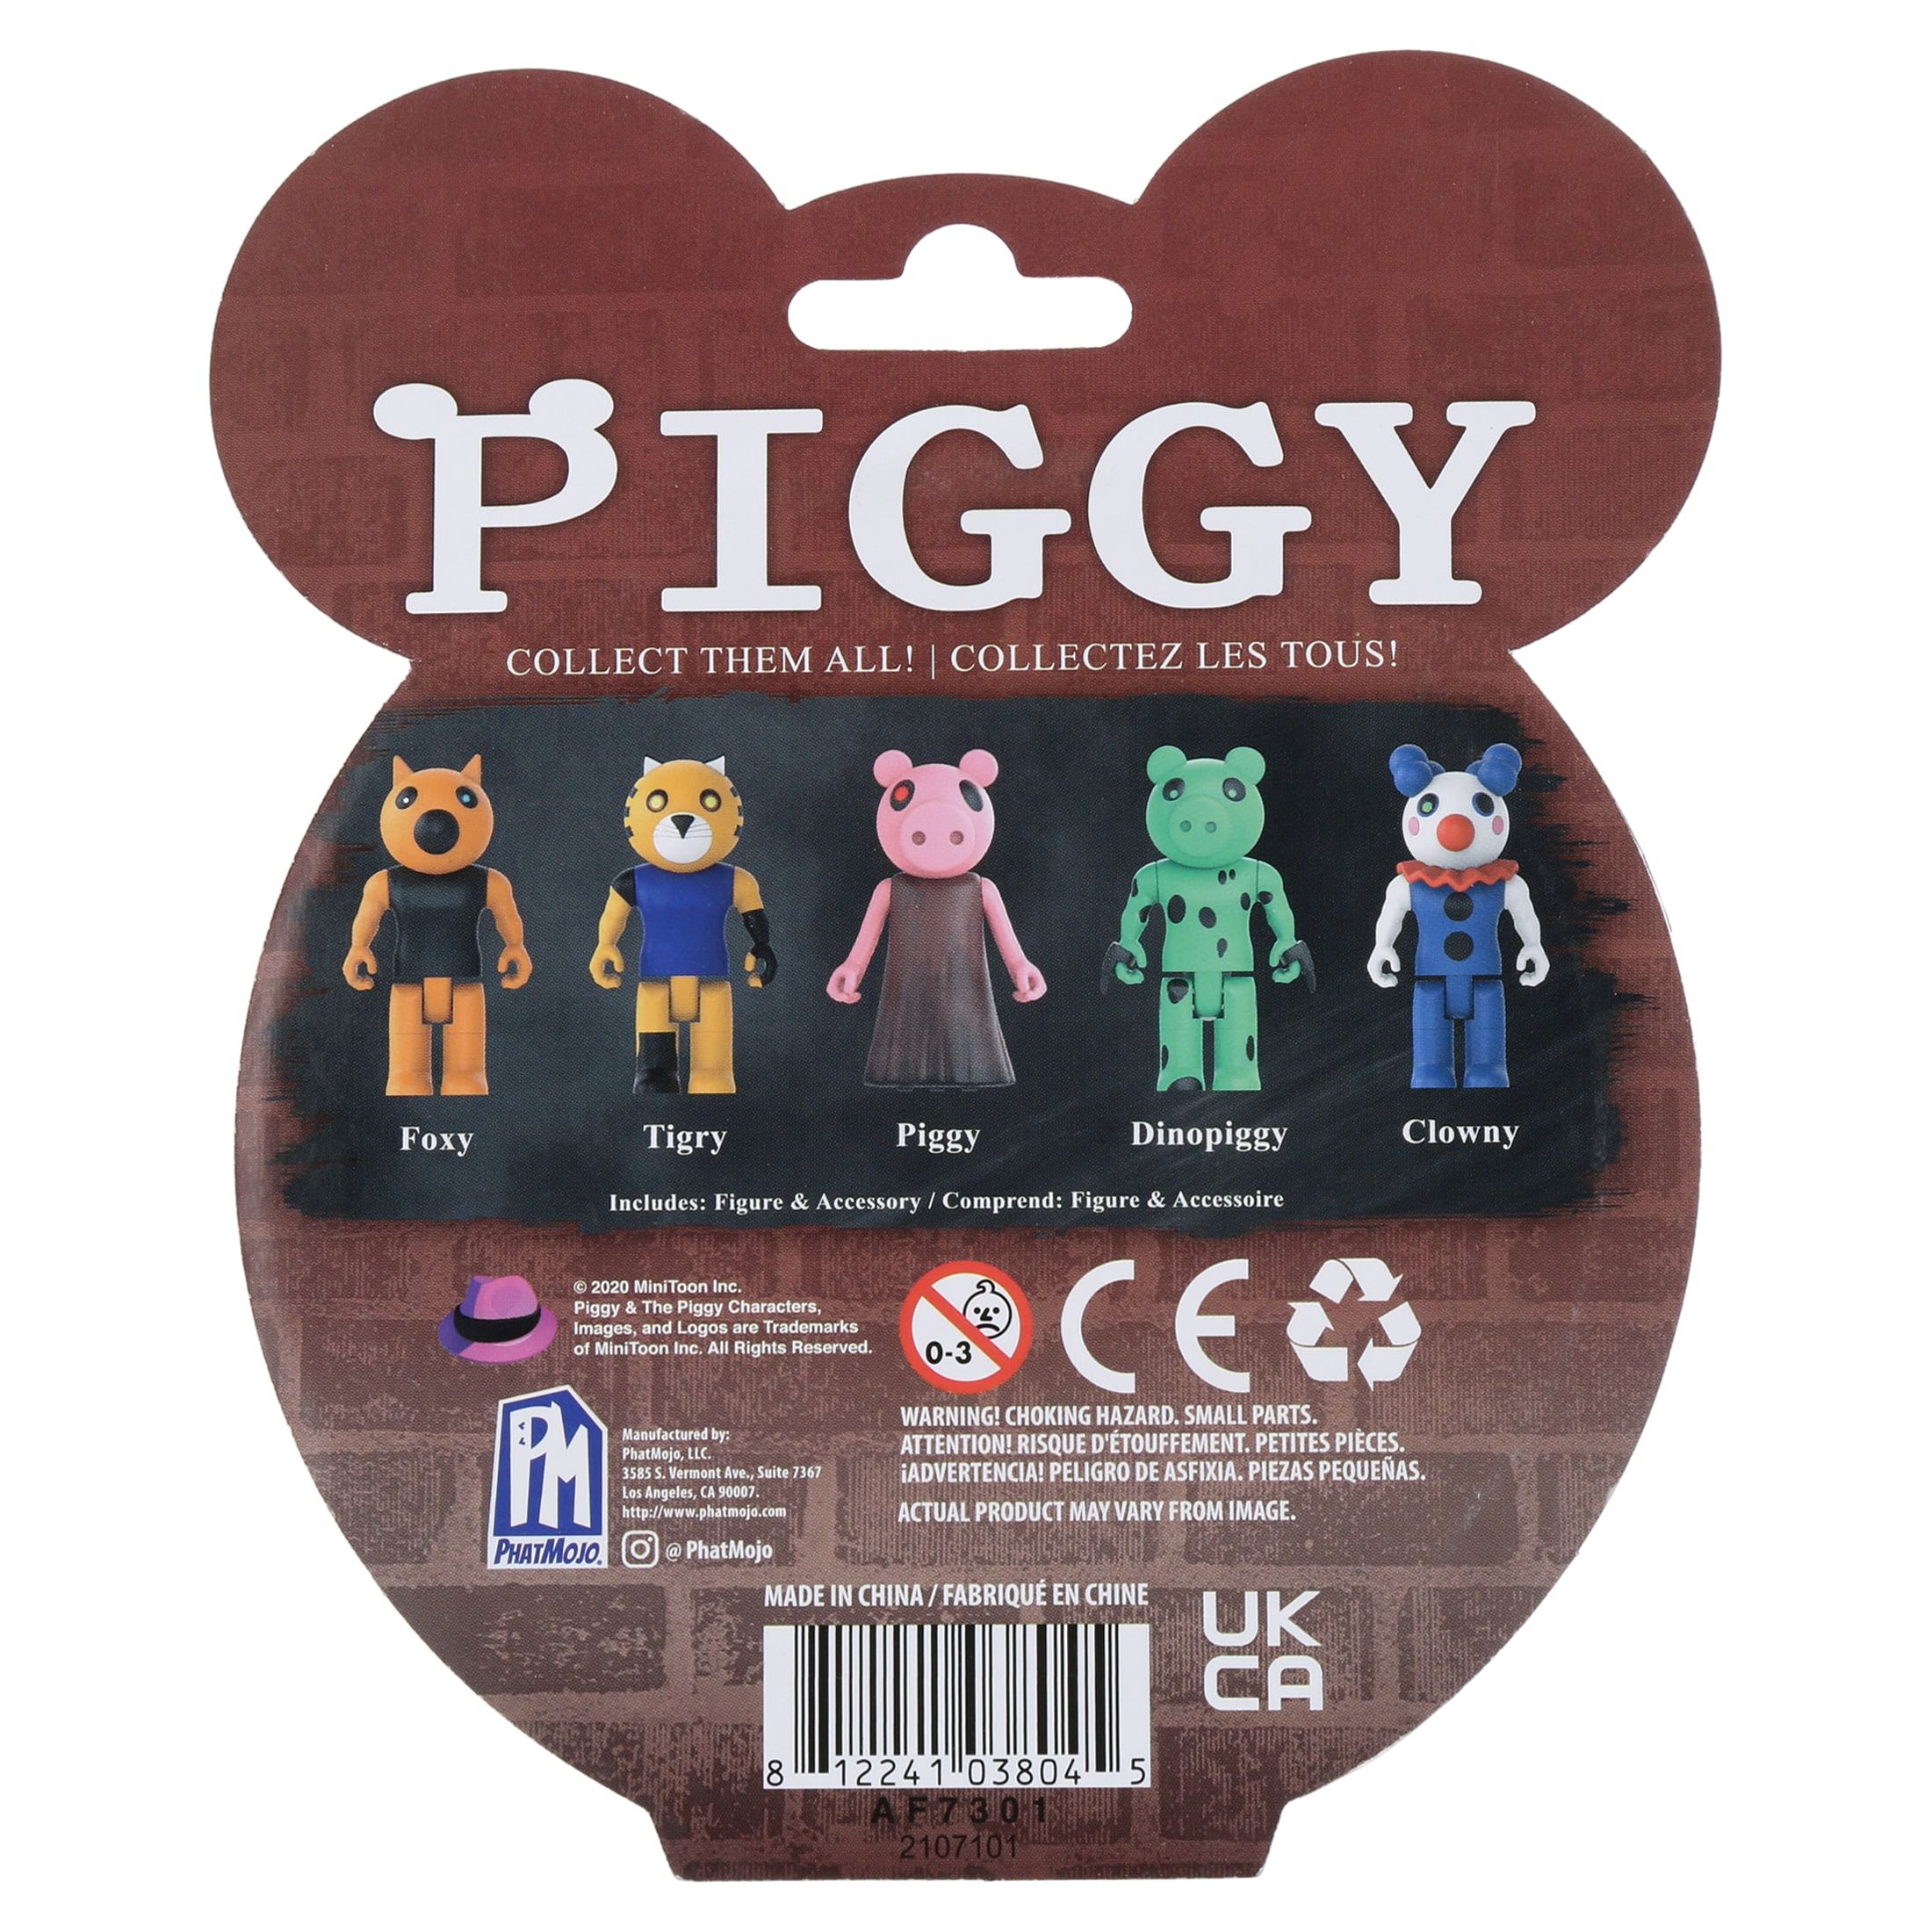 PIGGY - Piggy Action Figure (3.5" Buildable Toy, Series 1) [Includes DLC] - image 5 of 5